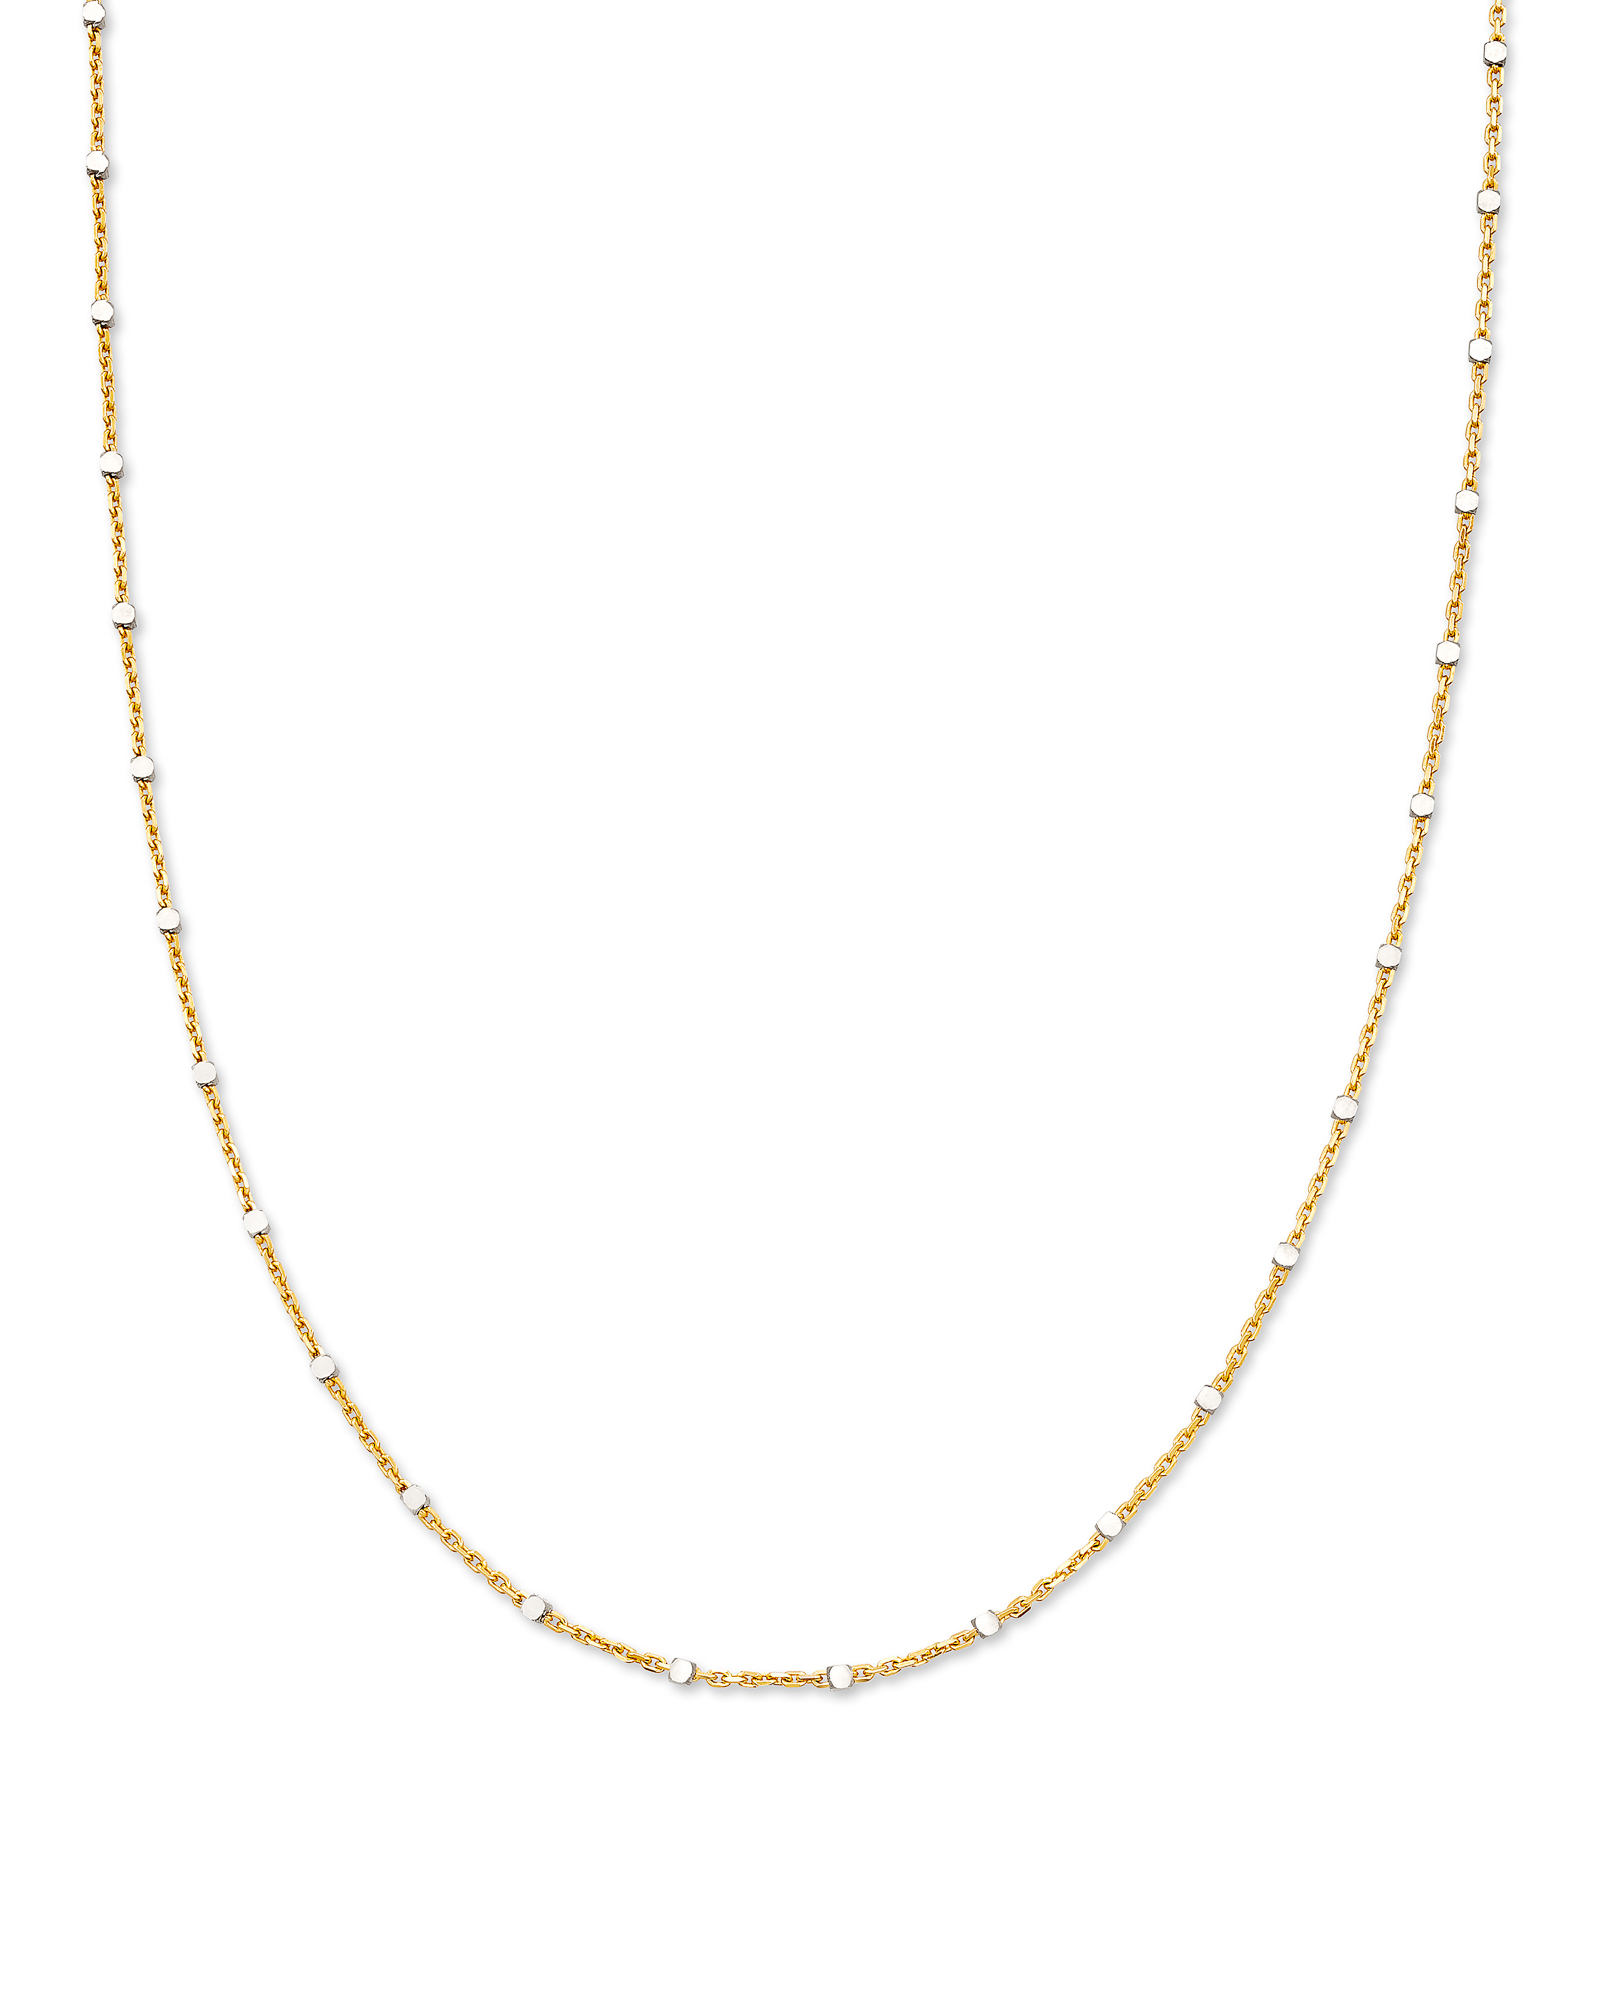 Murphy Chain Necklace in Gold | Kendra Scott